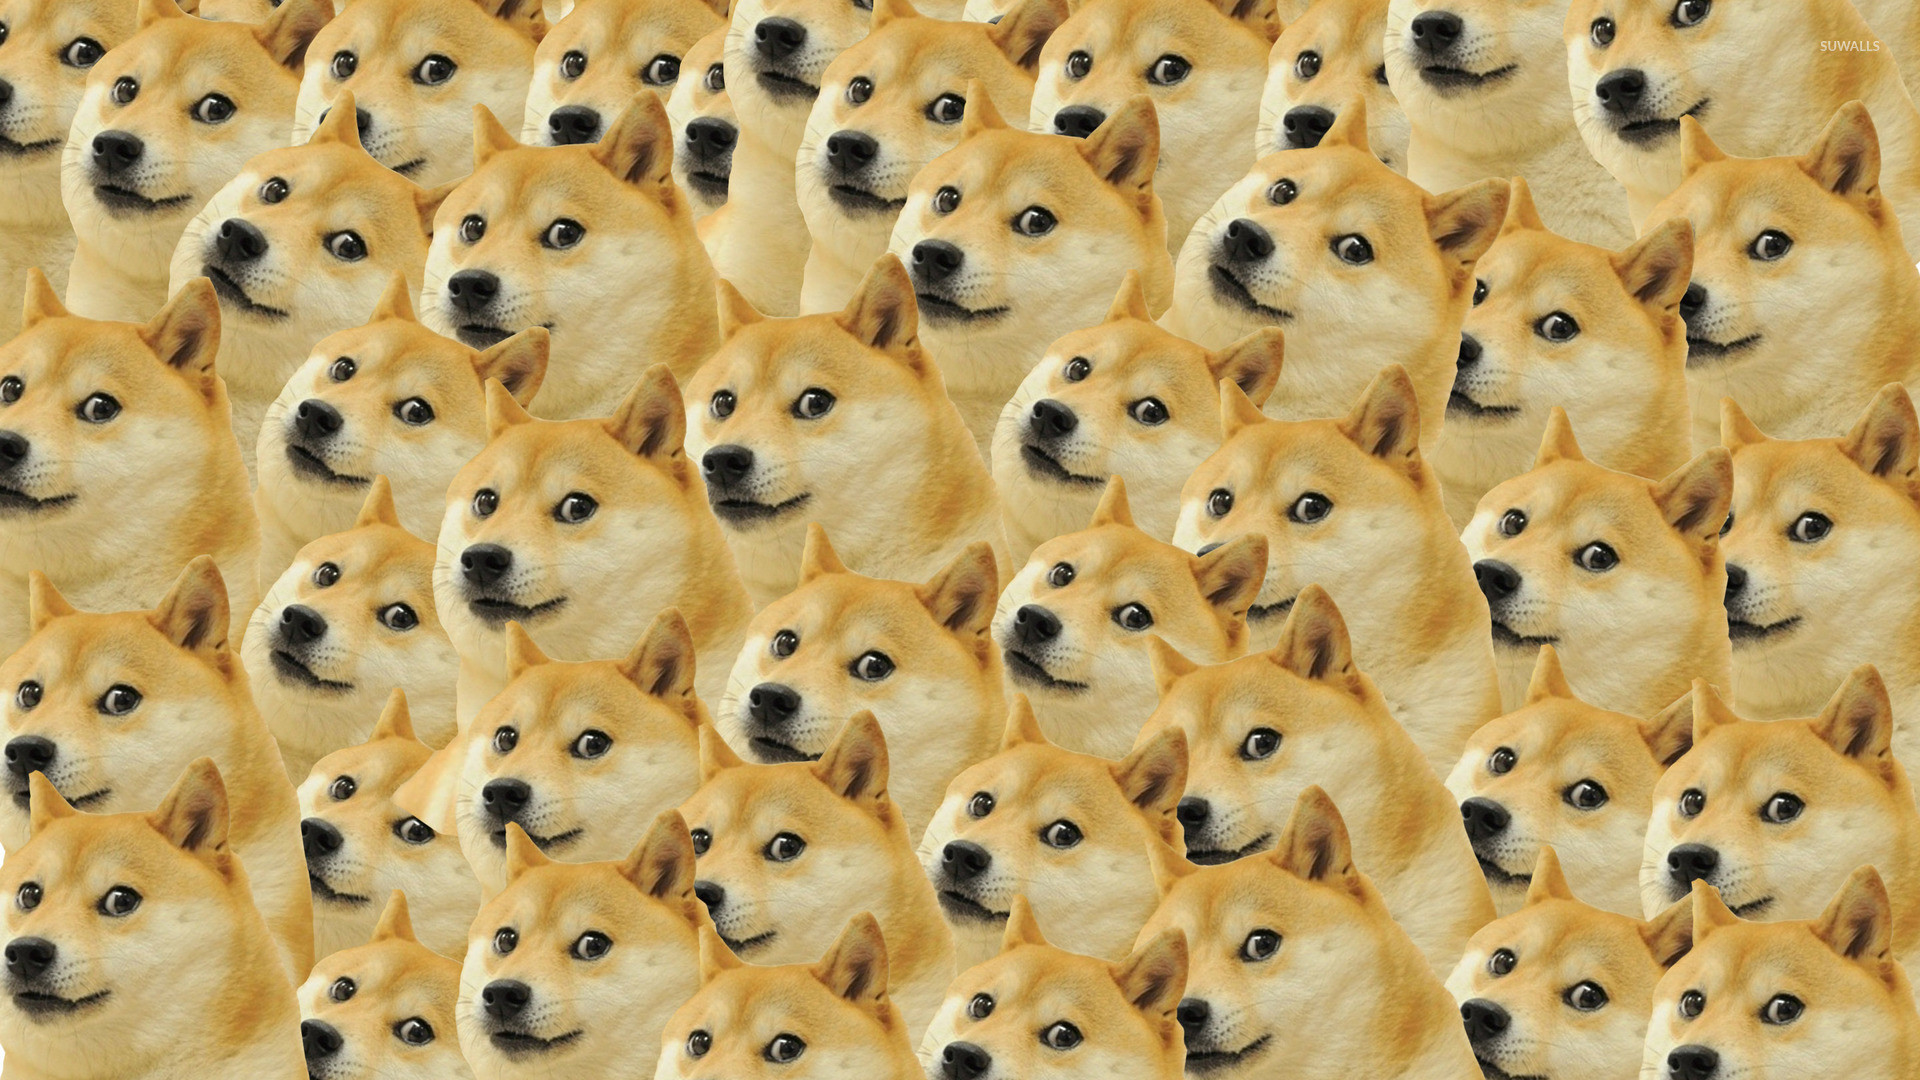 1920x1080 Doge pattern wallpaper - Meme wallpapers - #27481